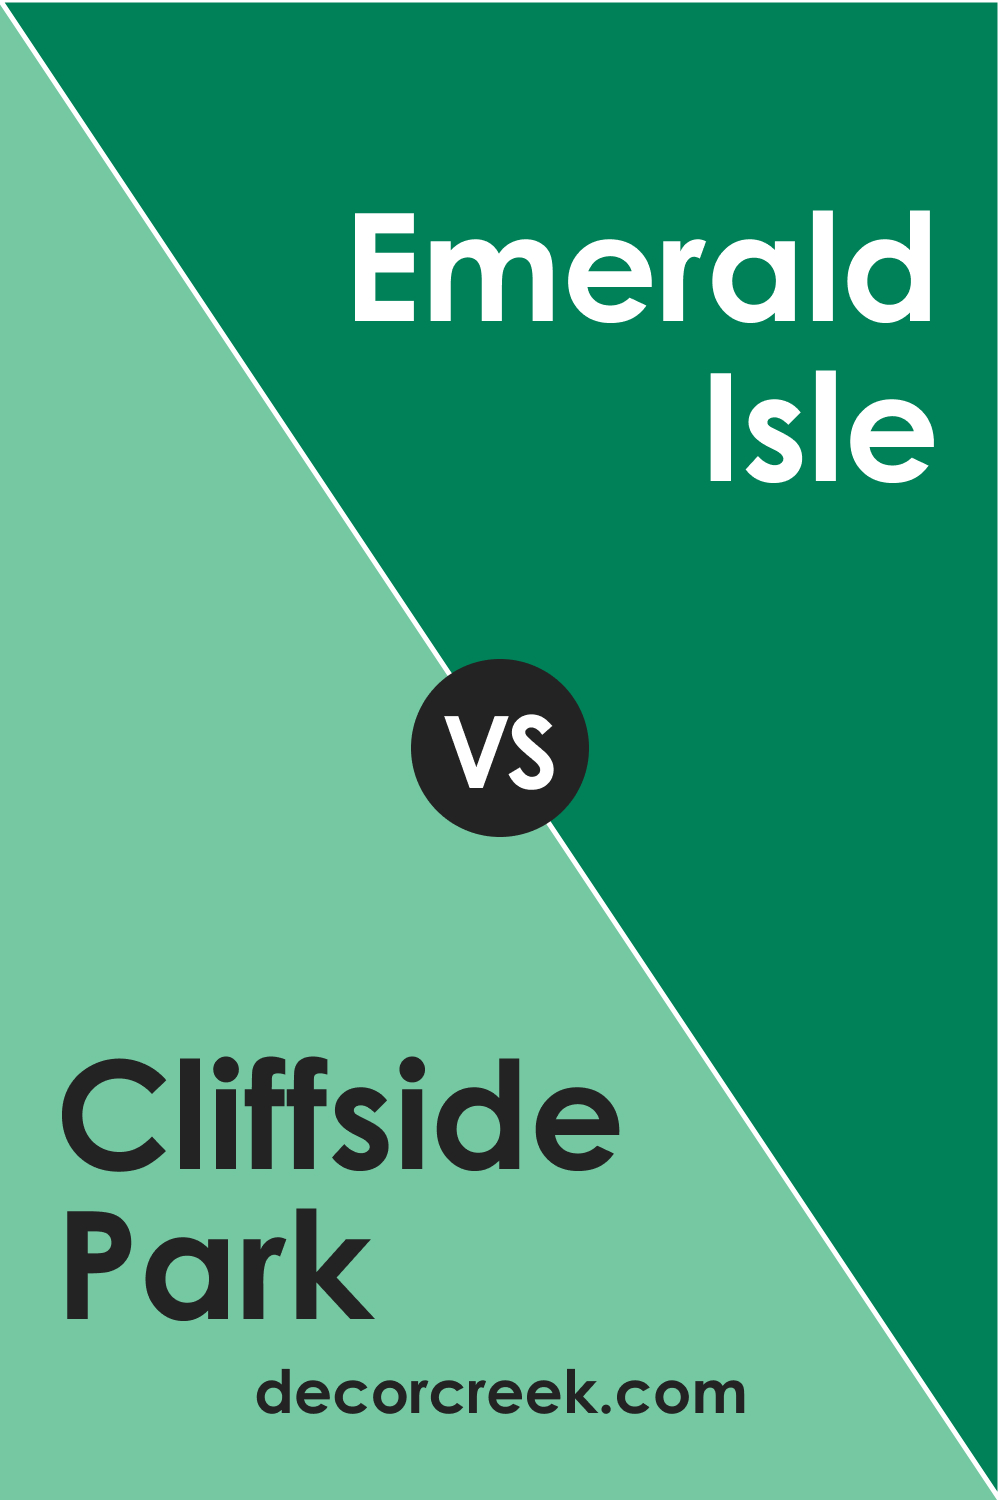 Cliffside Park 579 vs. BM 2039-20 Emerald Isle